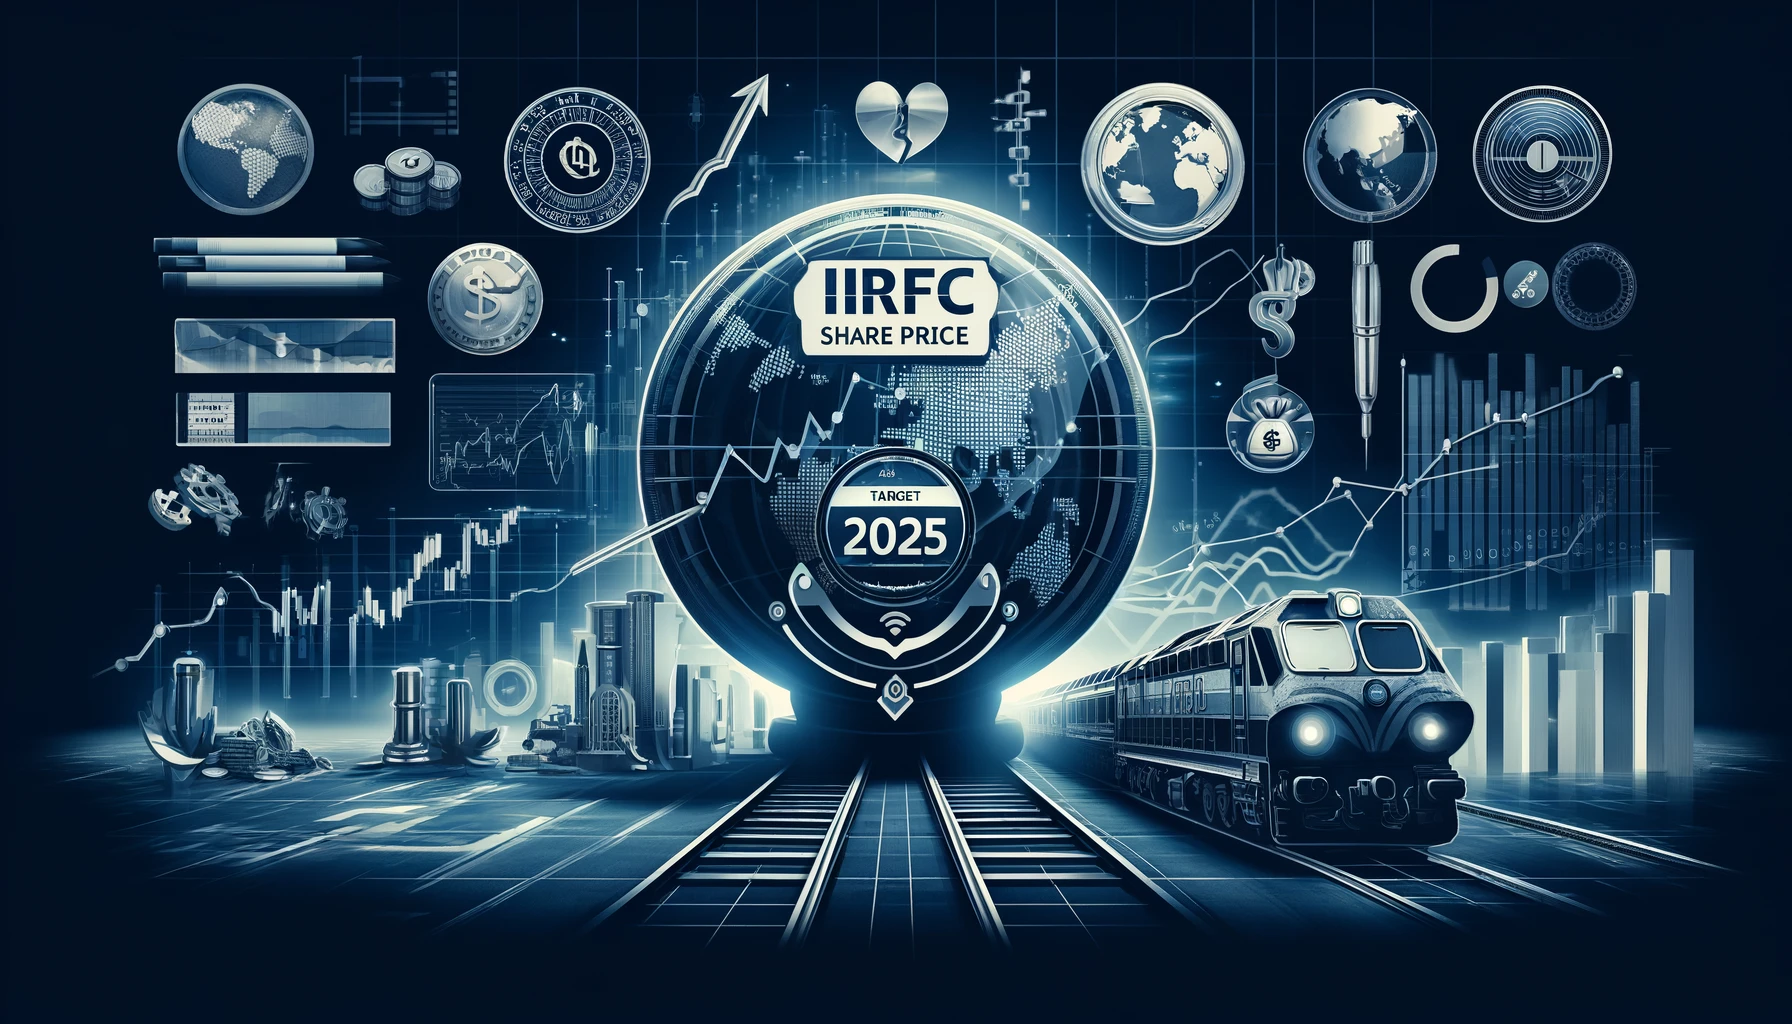 Irfc Share Price Target 2025